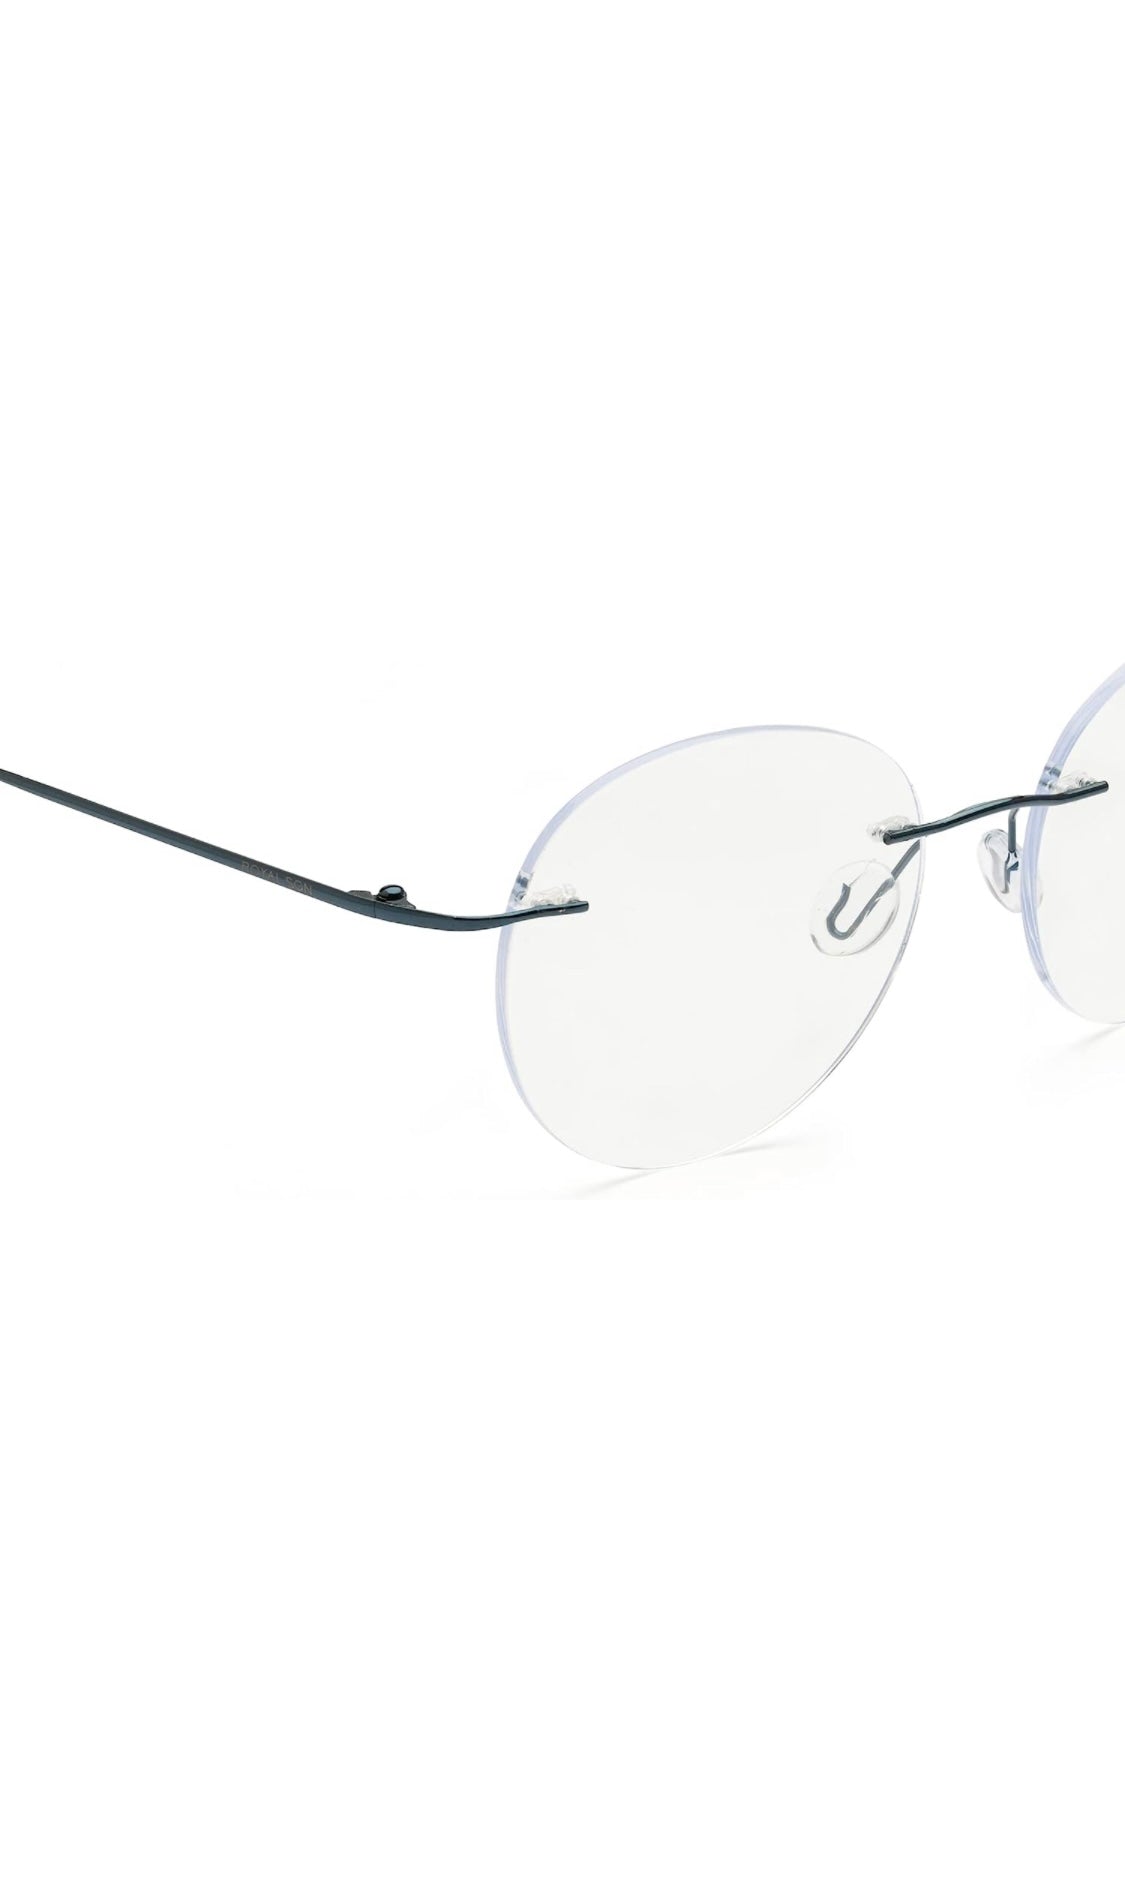 Jodykoes® Rimless Round Frame Zero Power Anti Glare Spectacle For Men and Women | Unisex Computer Eyeglasses Light Weight Round Frameless Eyewear (Blue) - Jodykoes ®